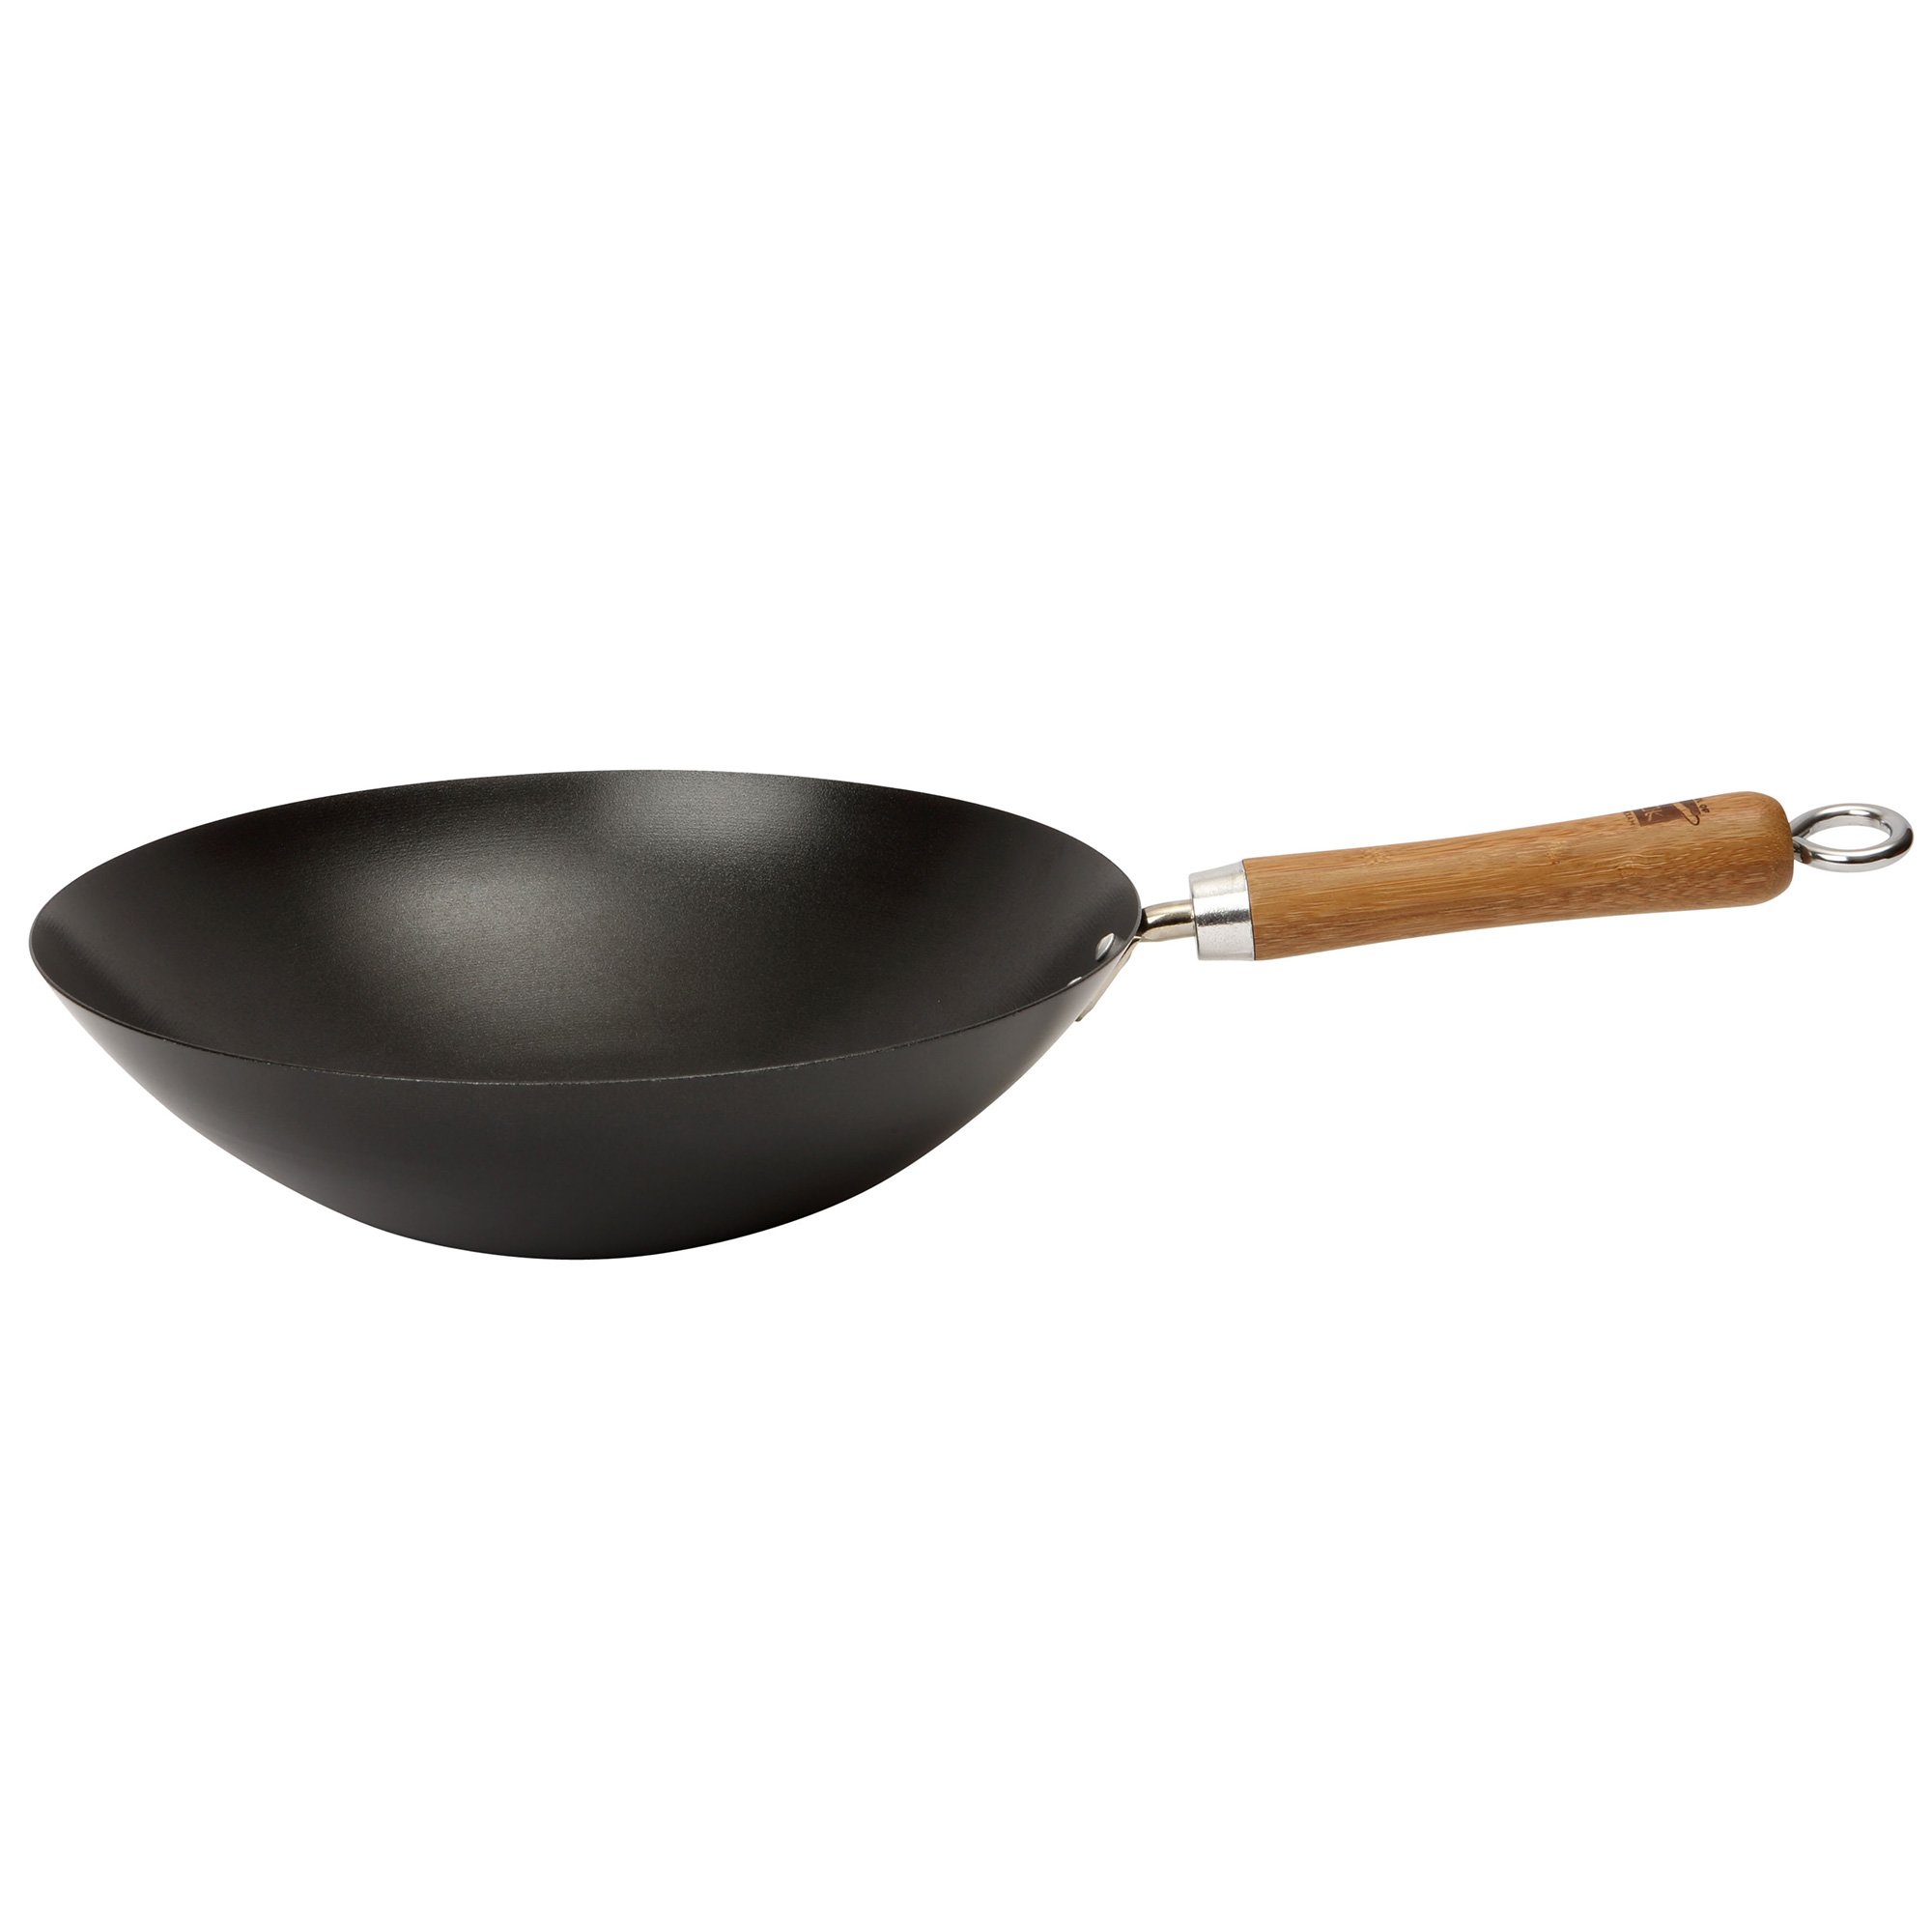 Dexam NS kulstål sort wok 30 cm.